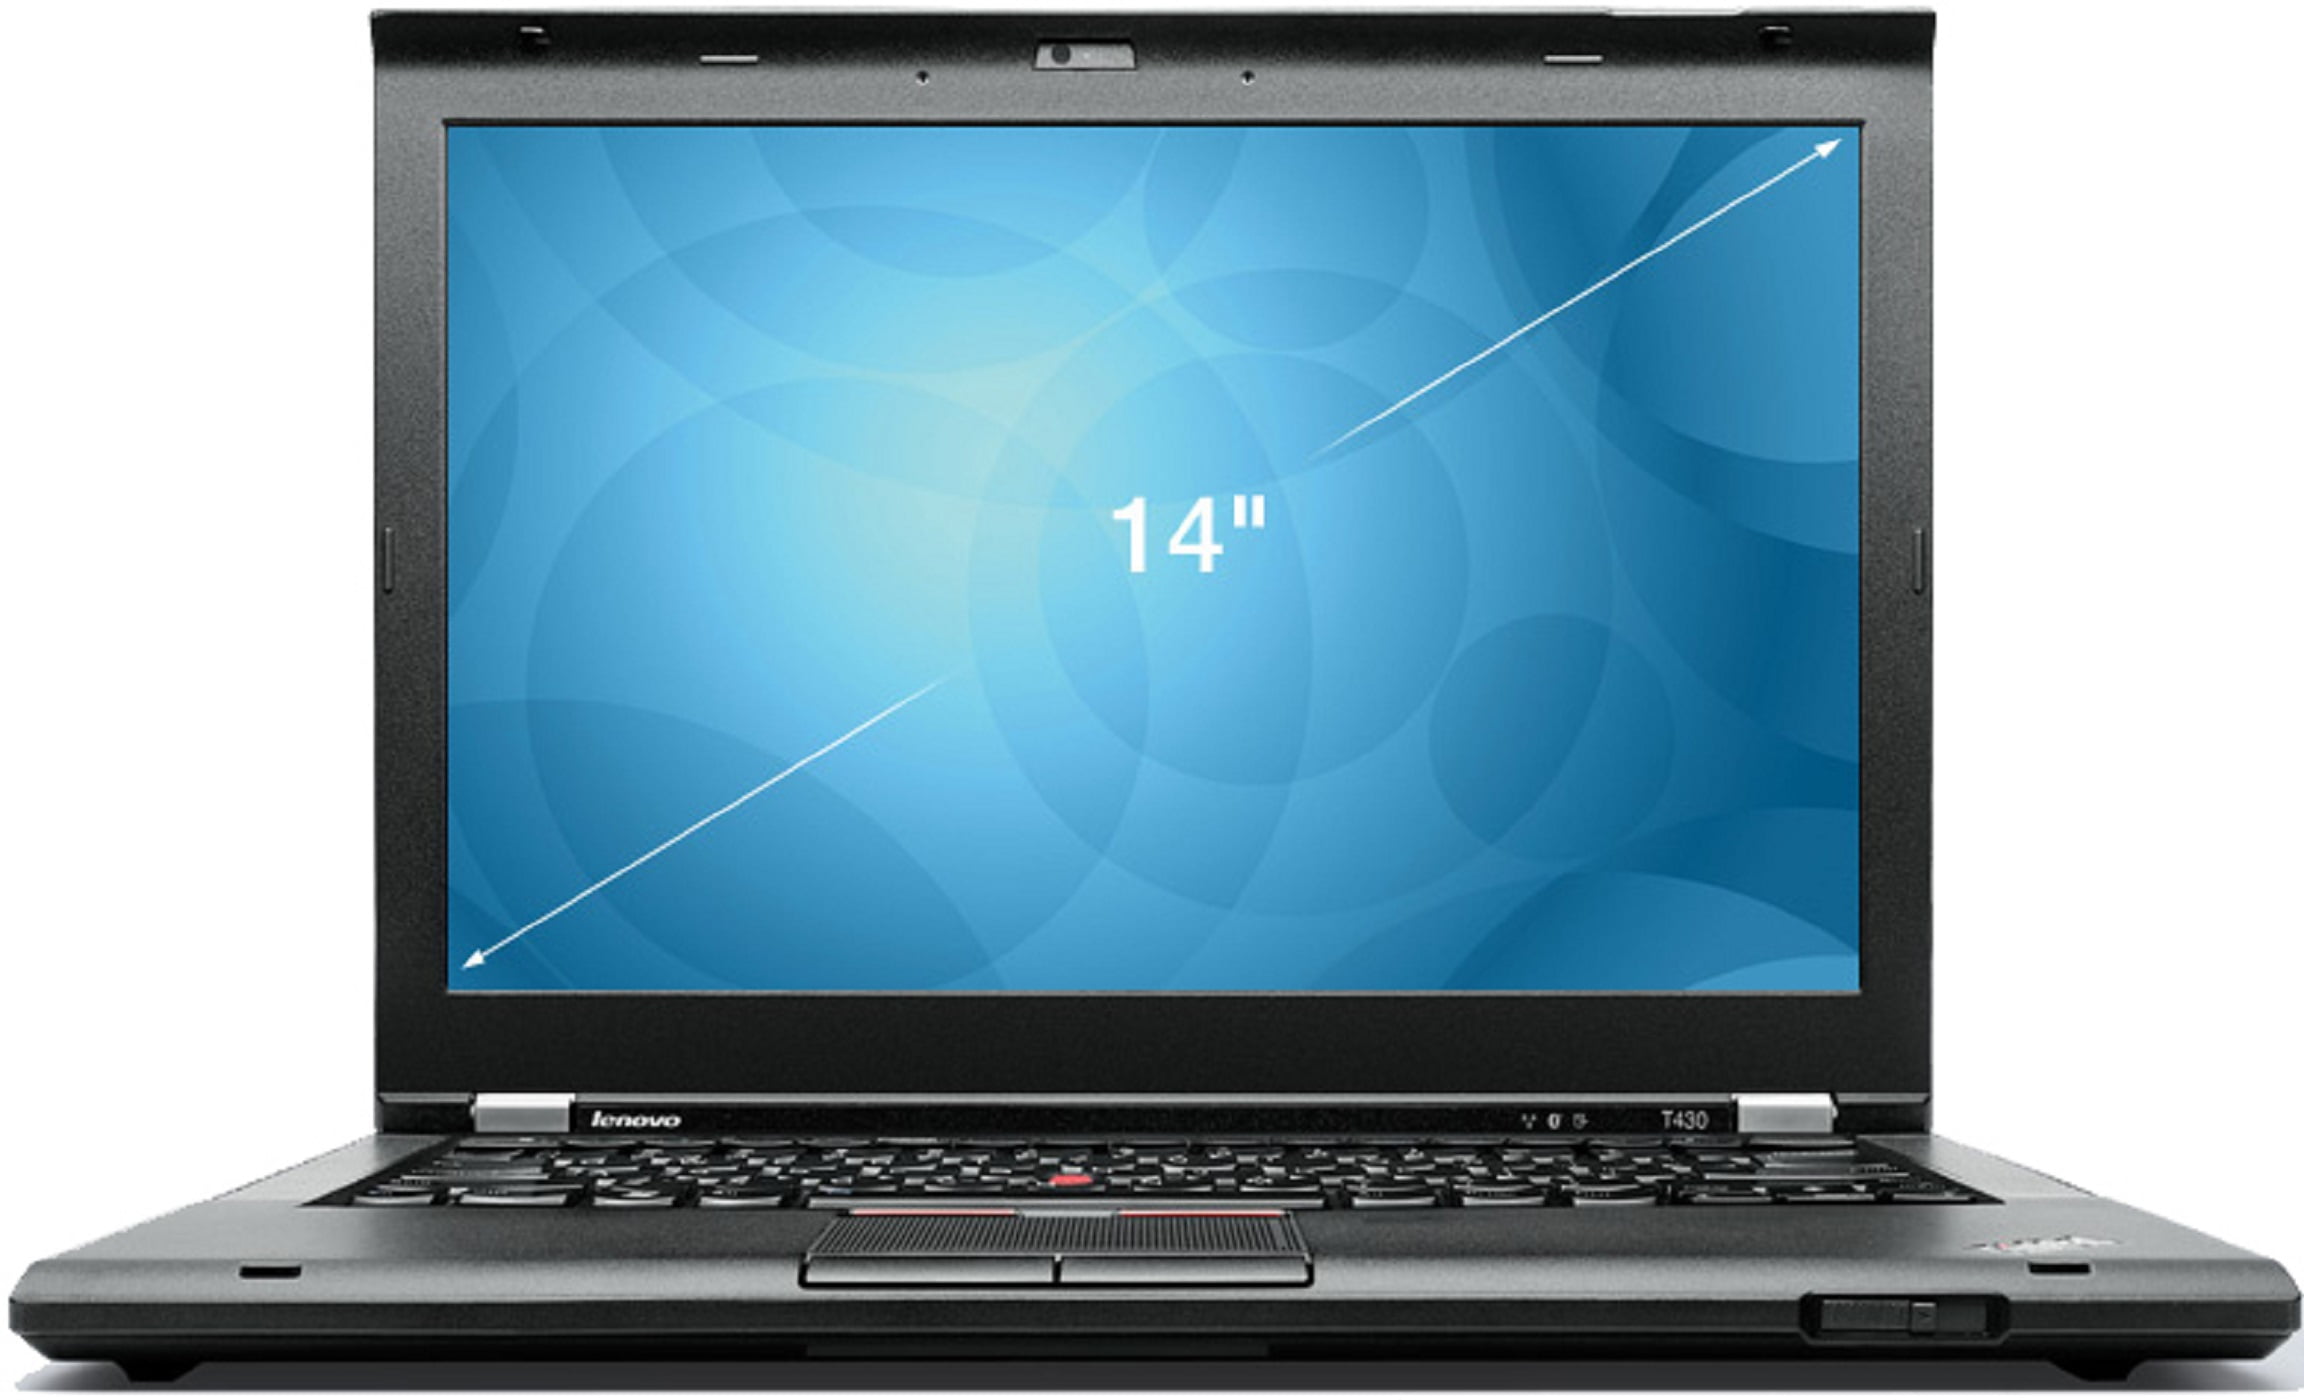 Lenovo ThinkPad T430 i5- 3210M CPU @2.50 Ghz- 2501 Mhz- 8 GB Ram